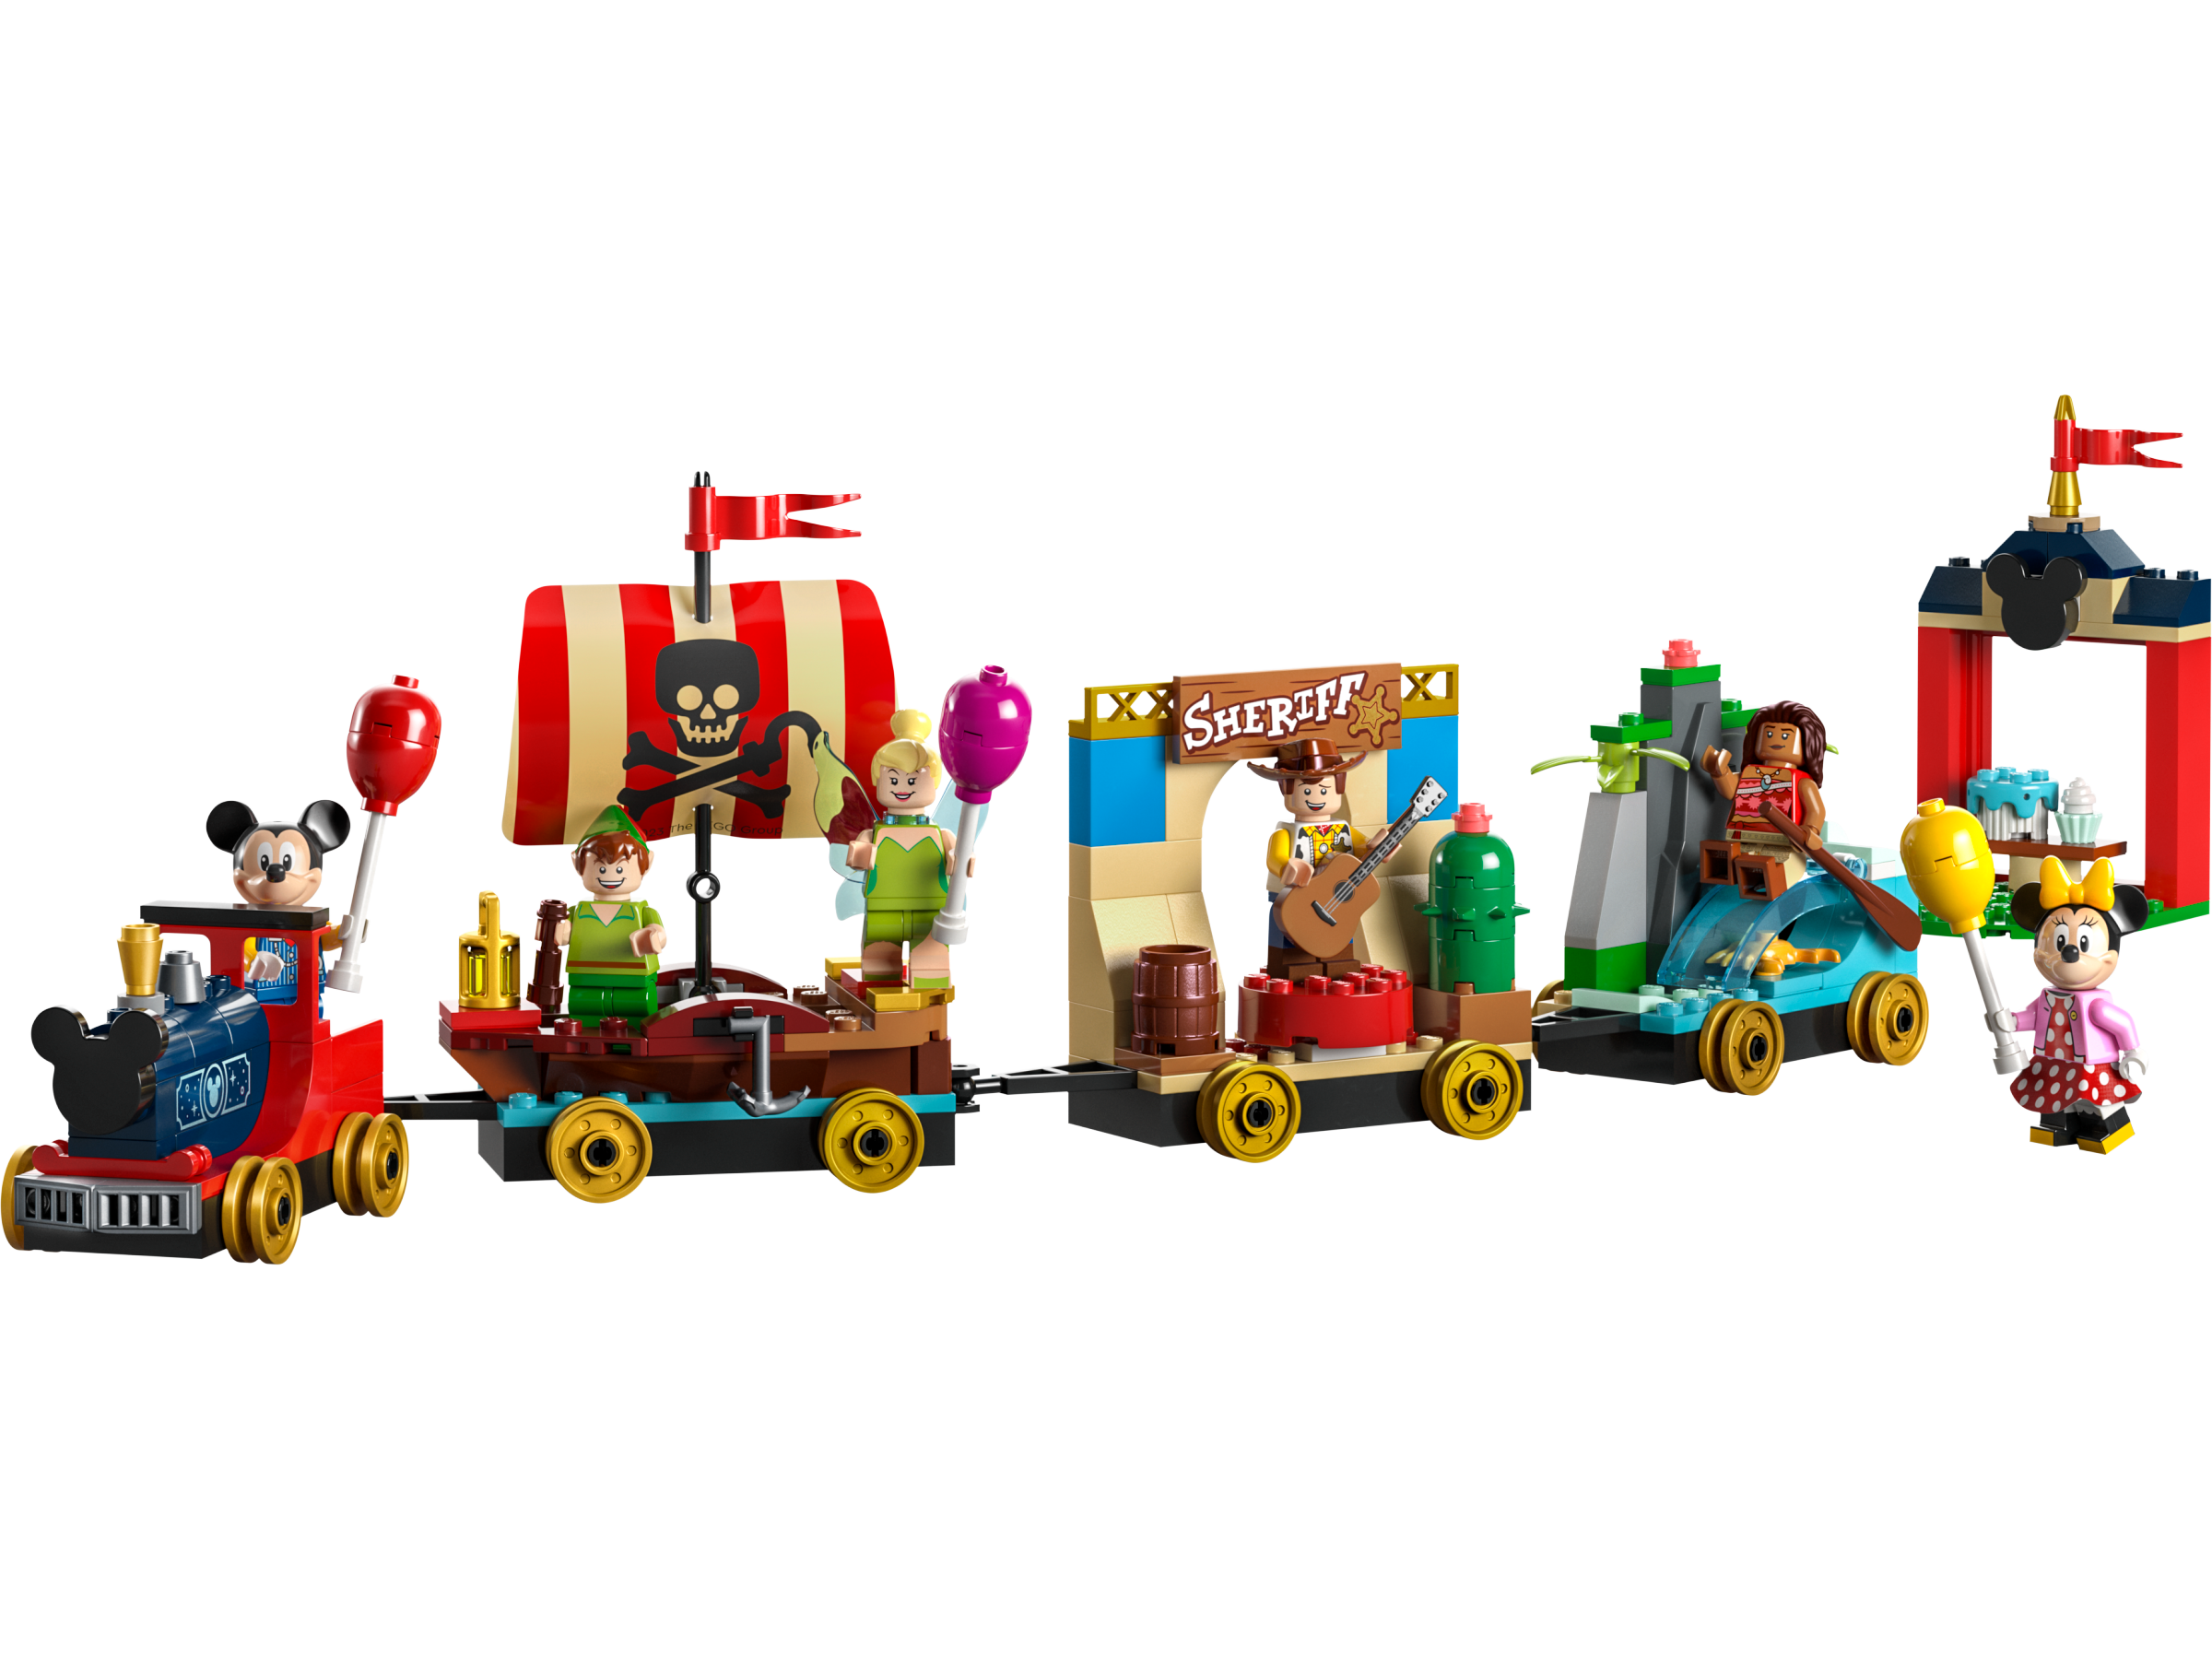 LEGO® Disney™ 43212 Disney Geburtstagszug